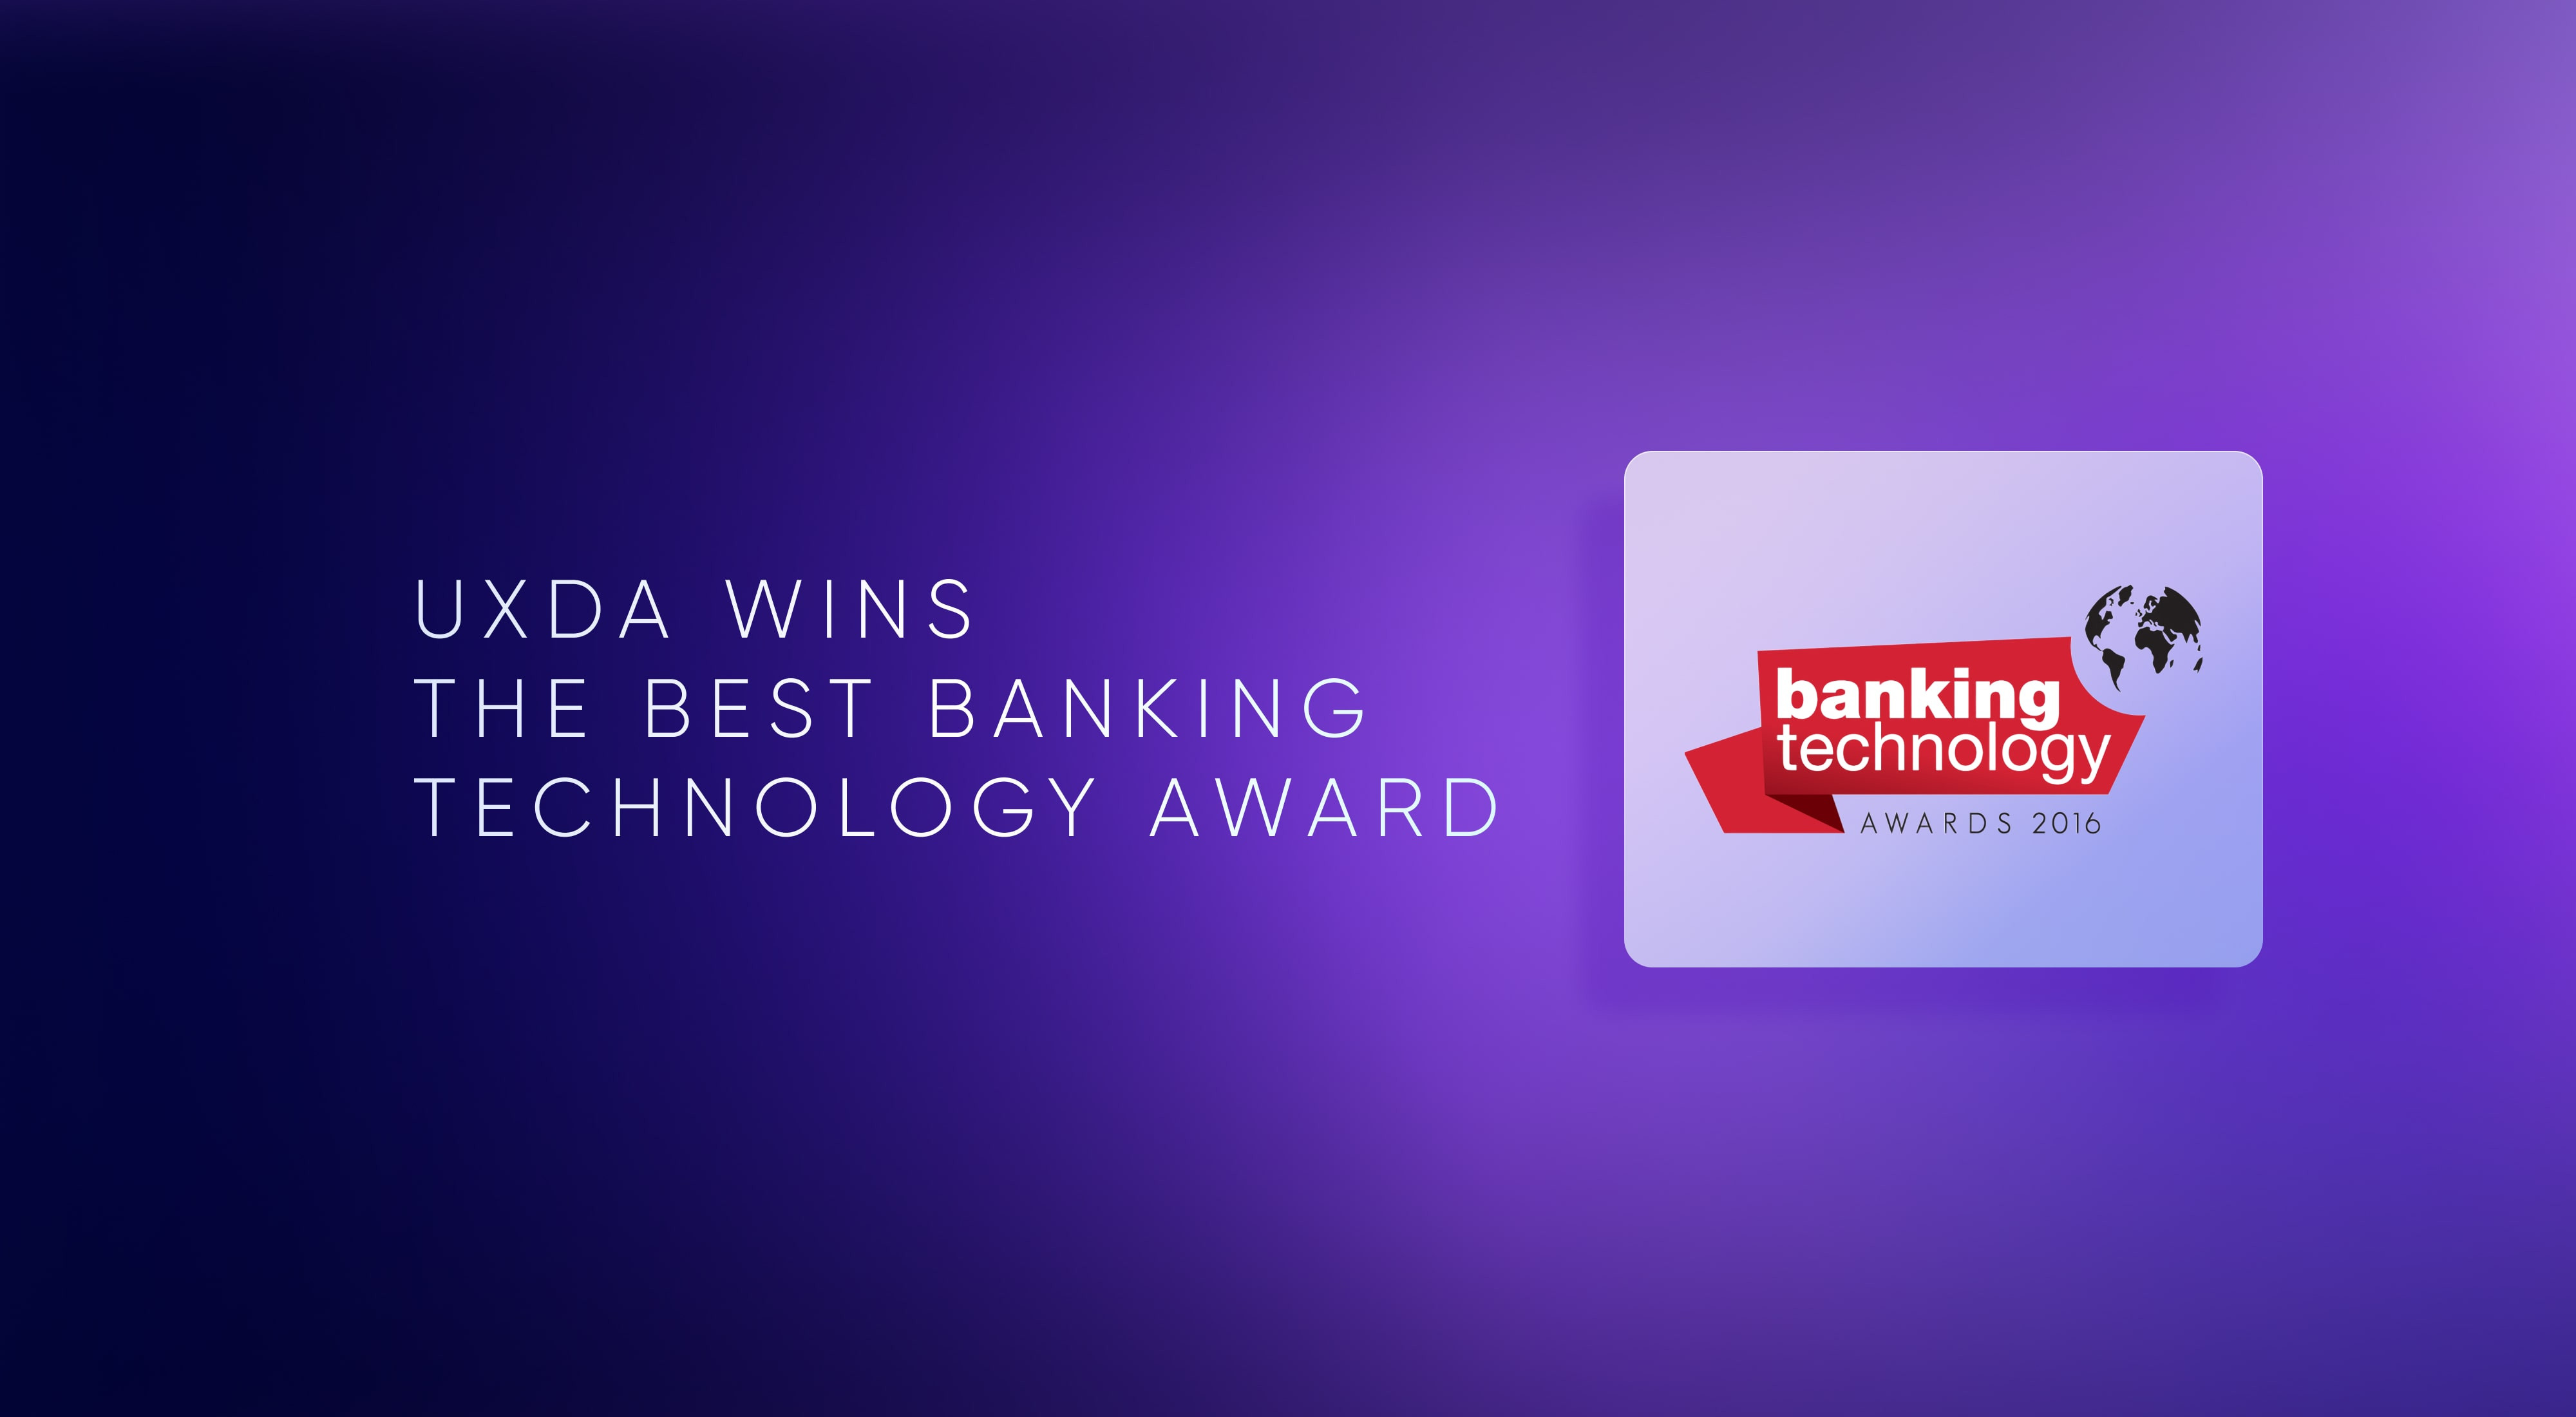 UXDA Design Firm Wins the Best Banking Technology Award